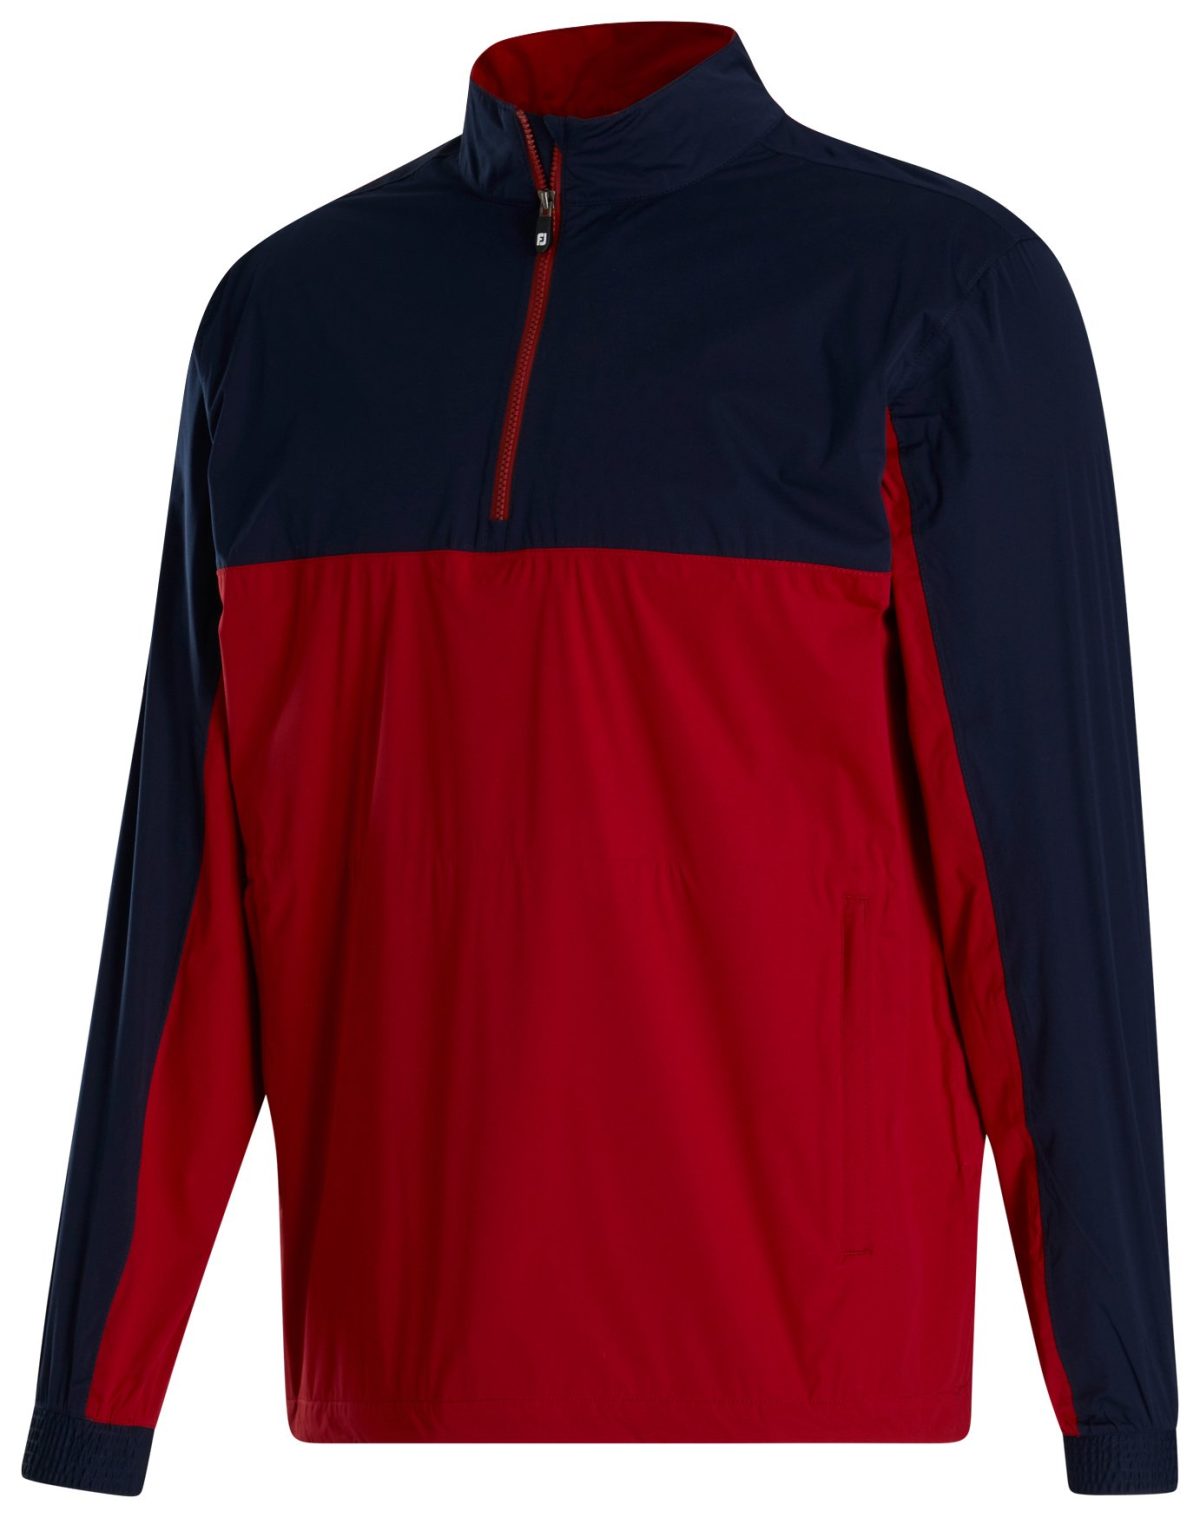 FootJoy Men's Hydroknit Golf Pullover in Navy/Crimson, Size S